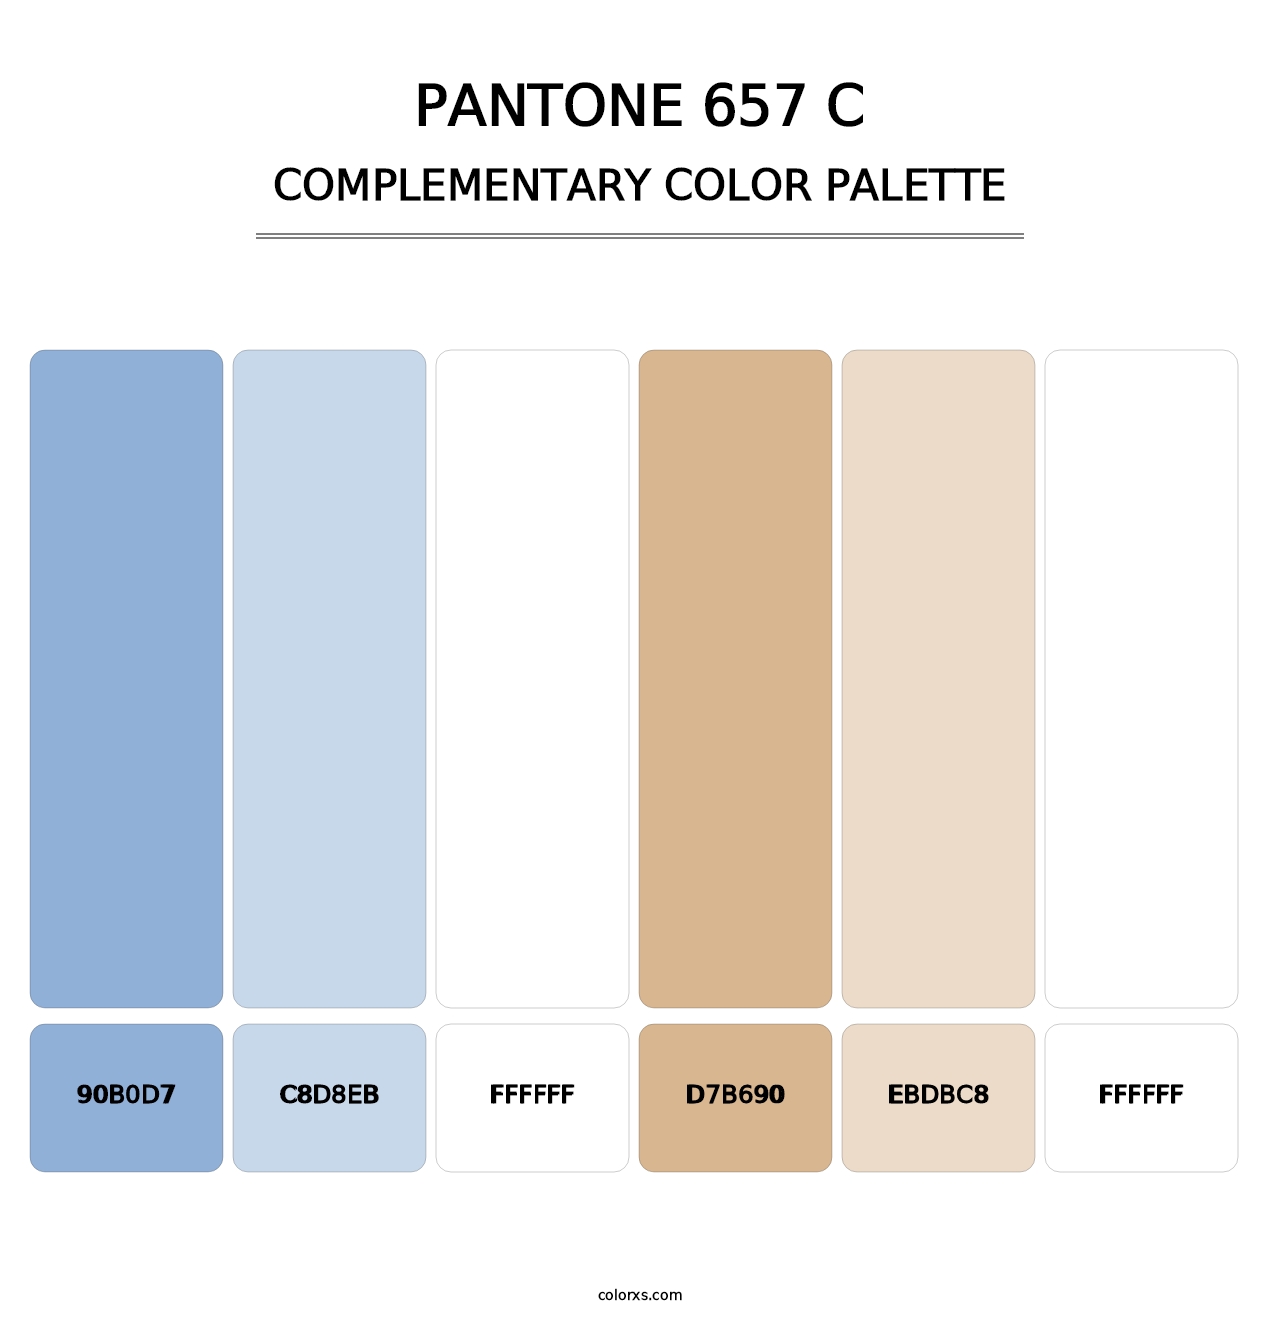 PANTONE 657 C - Complementary Color Palette